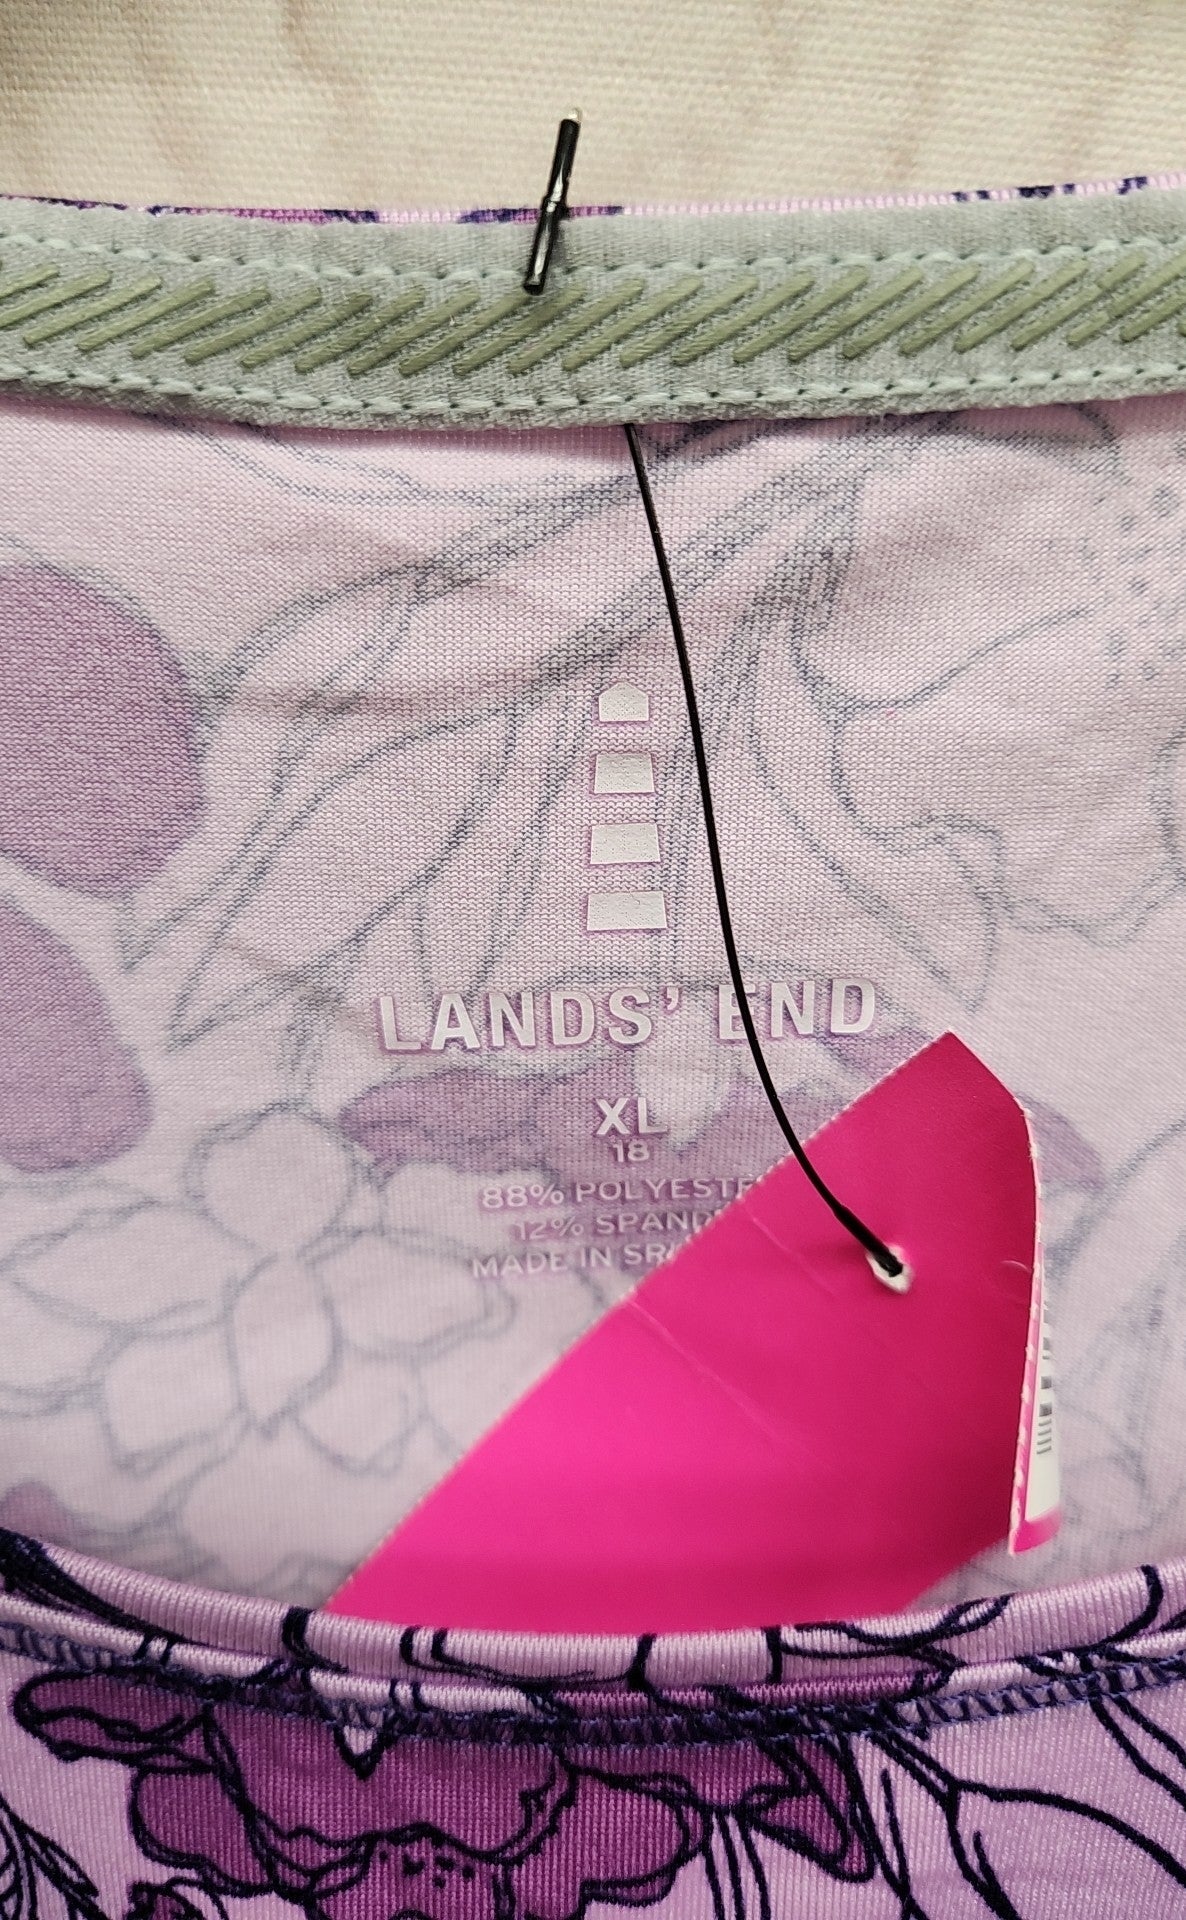 Lands End Women's Size XL Purple Floral Sleeveless Top